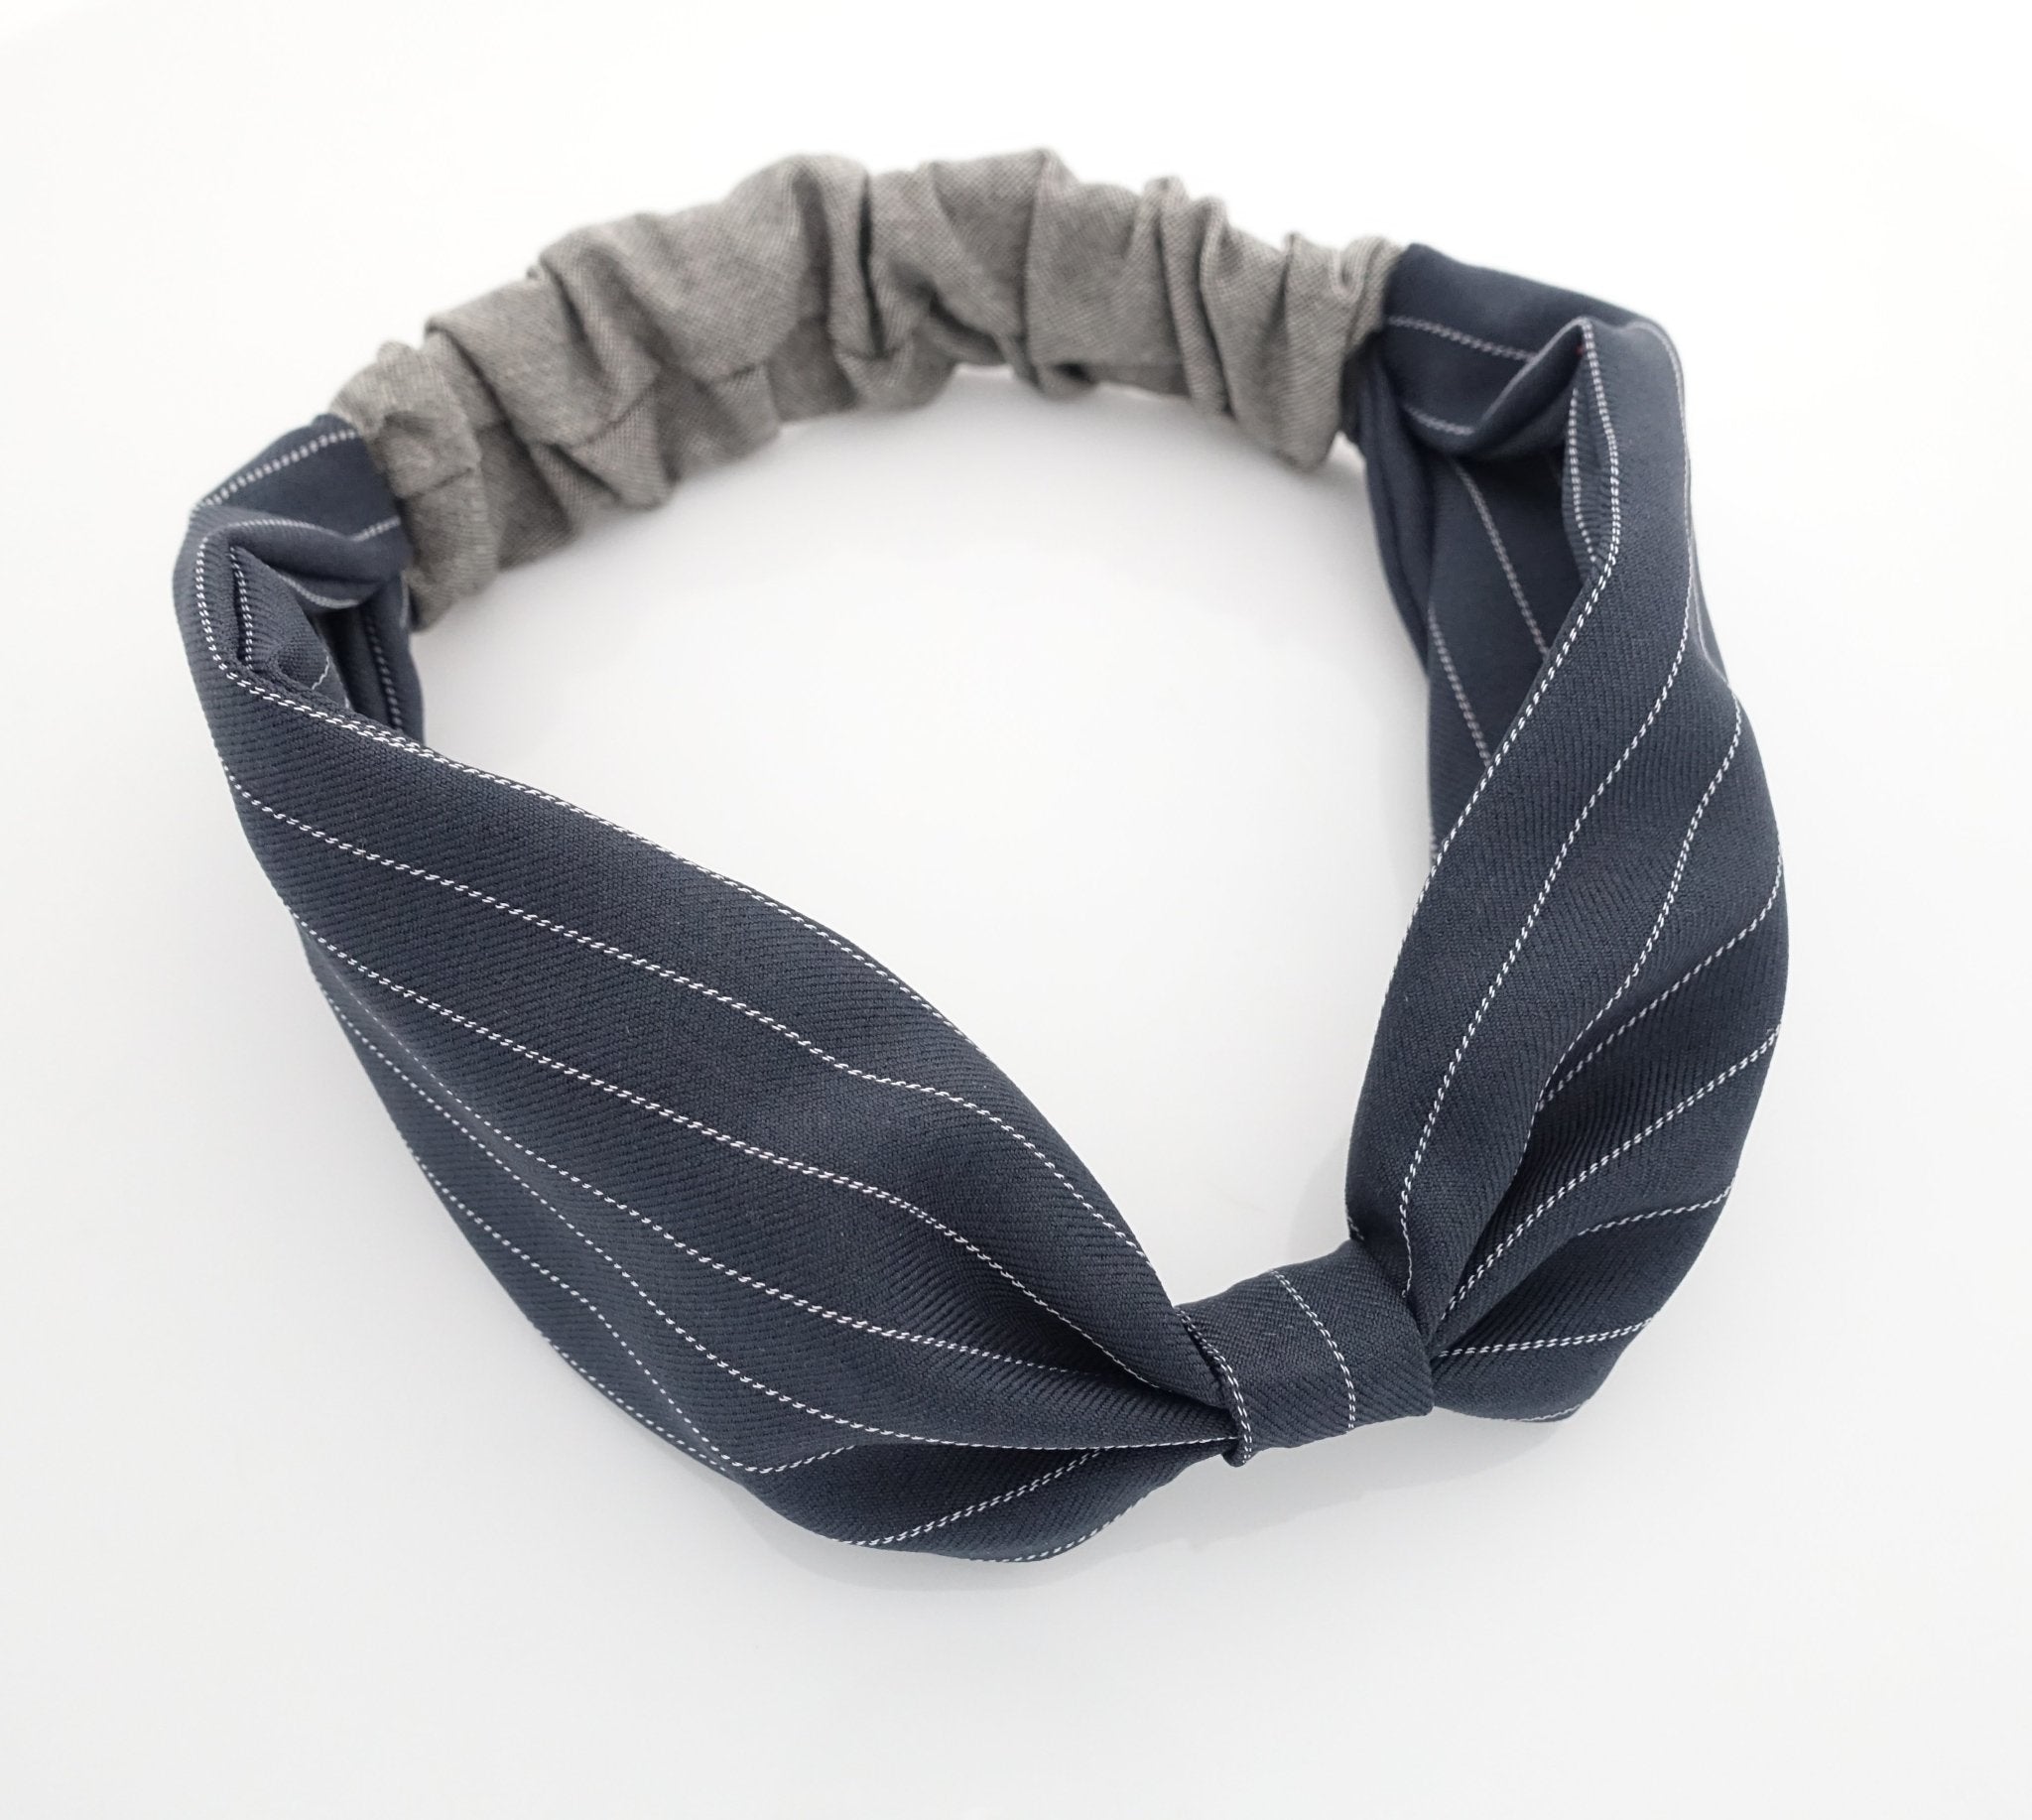 veryshine.com hairband/headband Gray stripe pattern fashion headband suit style fabric headwrap women hair accessory